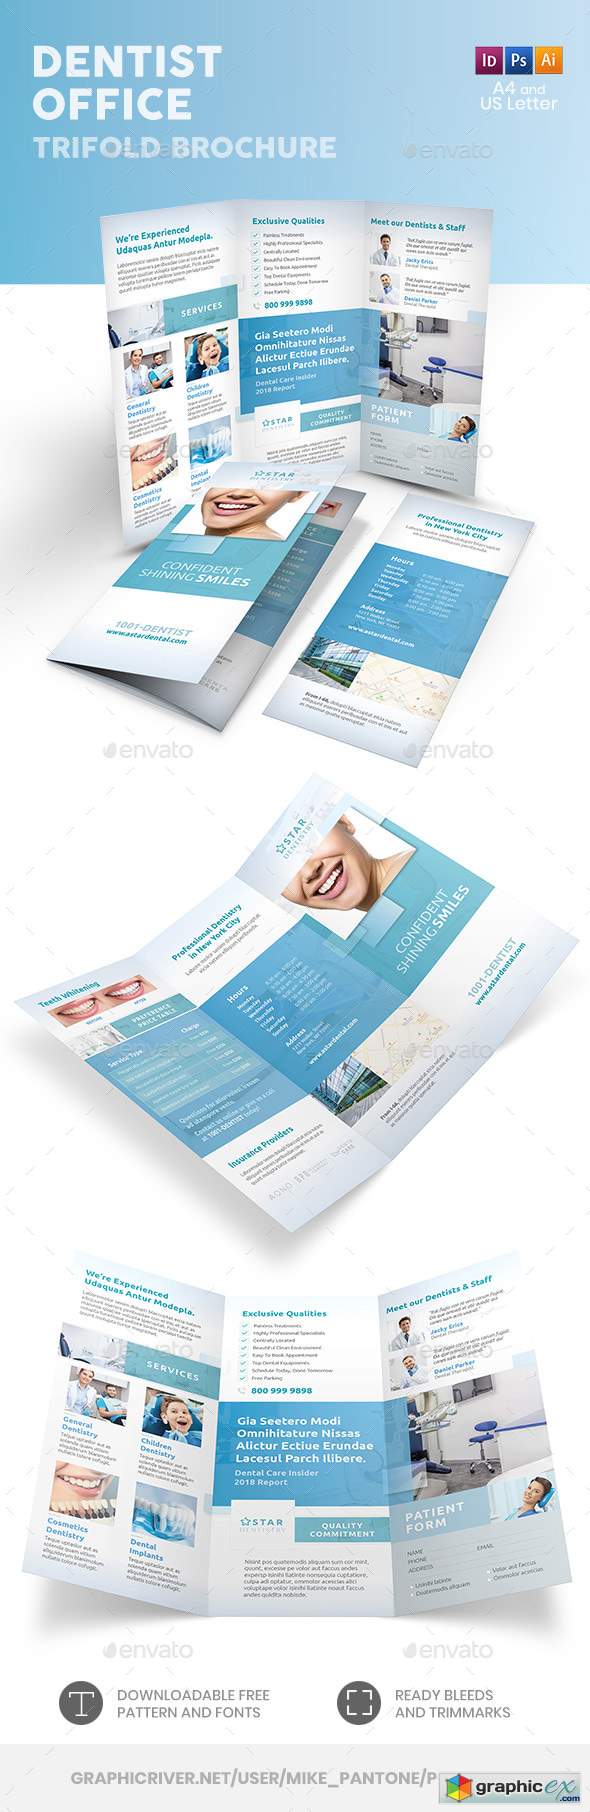 Dentist Office Trifold Brochure 6